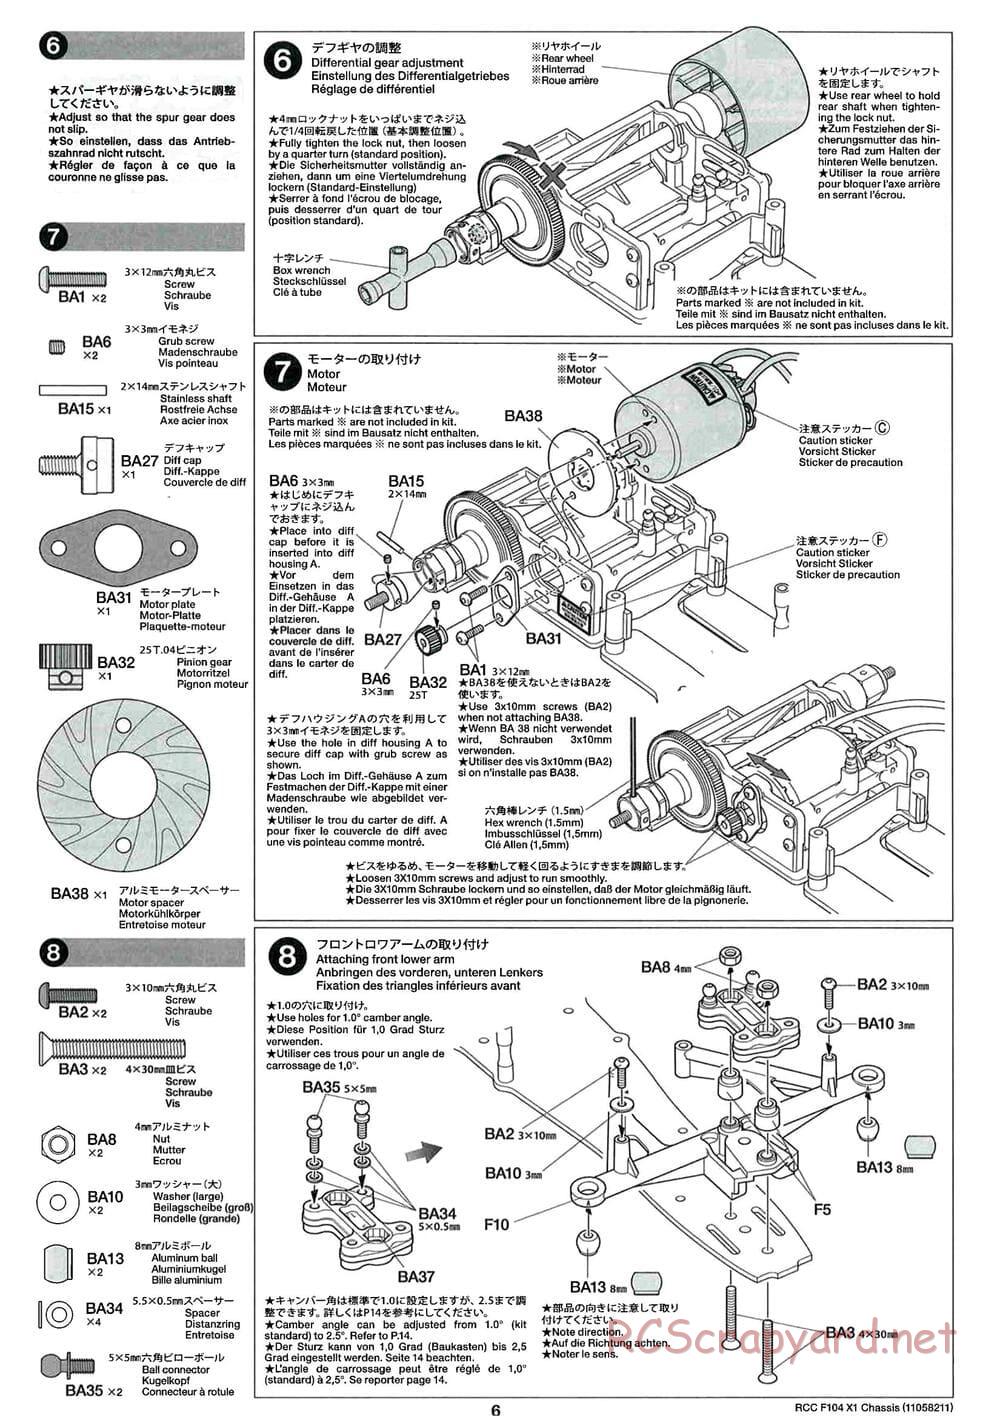 Tamiya - F104X1 Chassis - Manual - Page 6